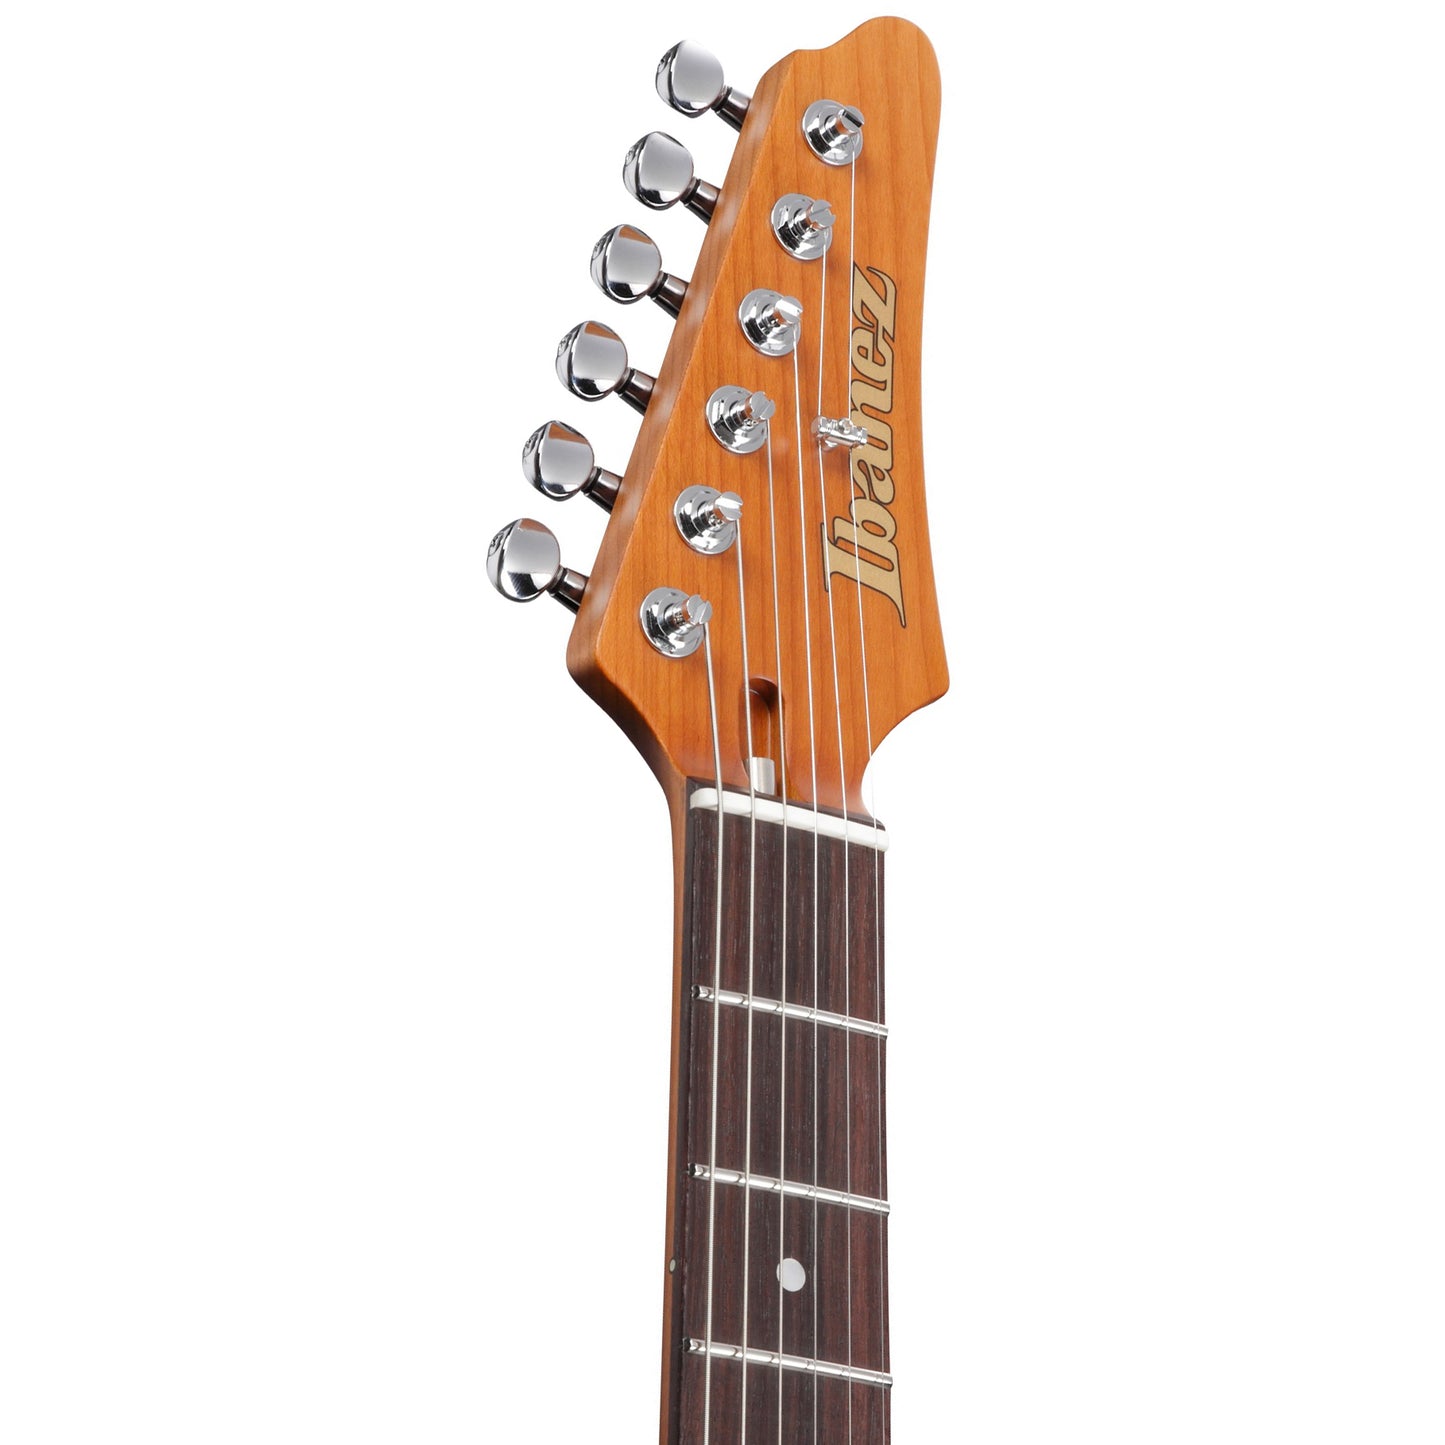 Ibanez AZ2204NWMGR AZ Prestige 6-String Electric Guitar - Mint Green